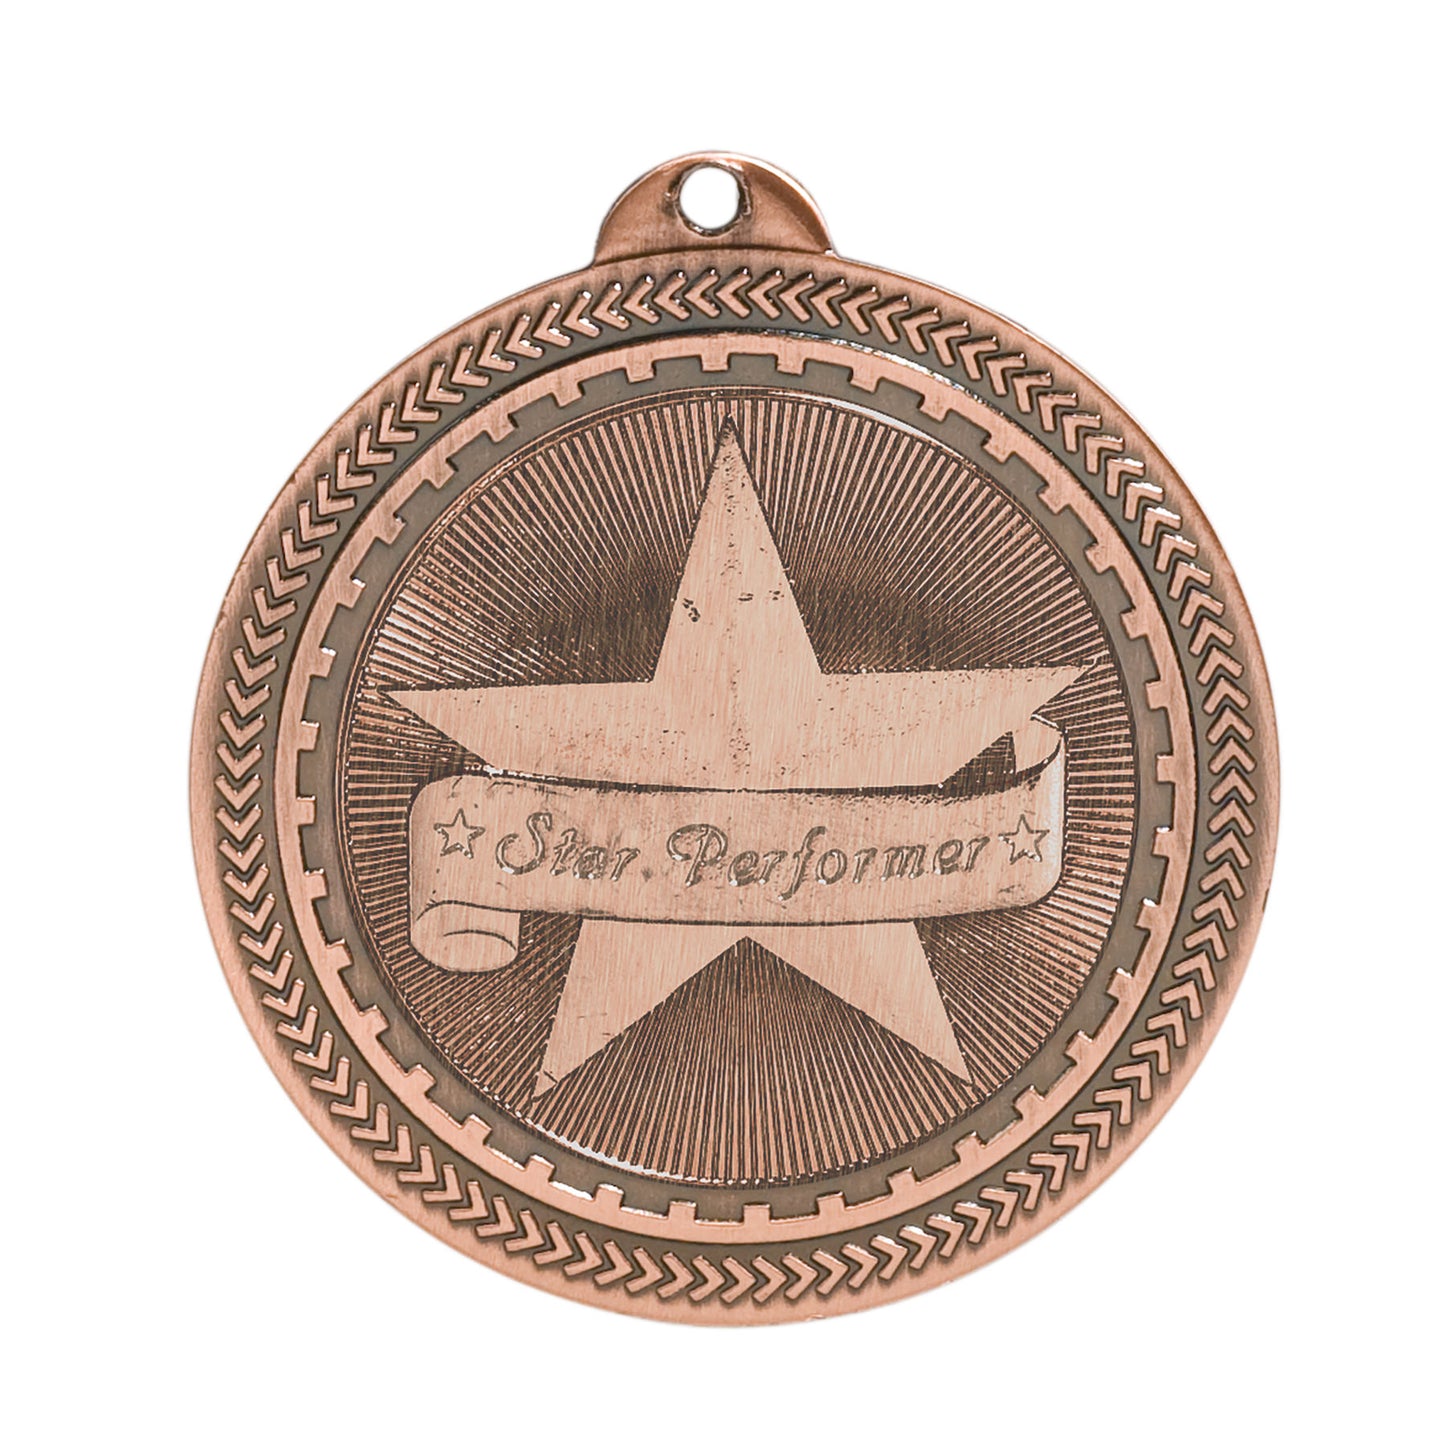 2" Star Performer Laserable BriteLazer Medal